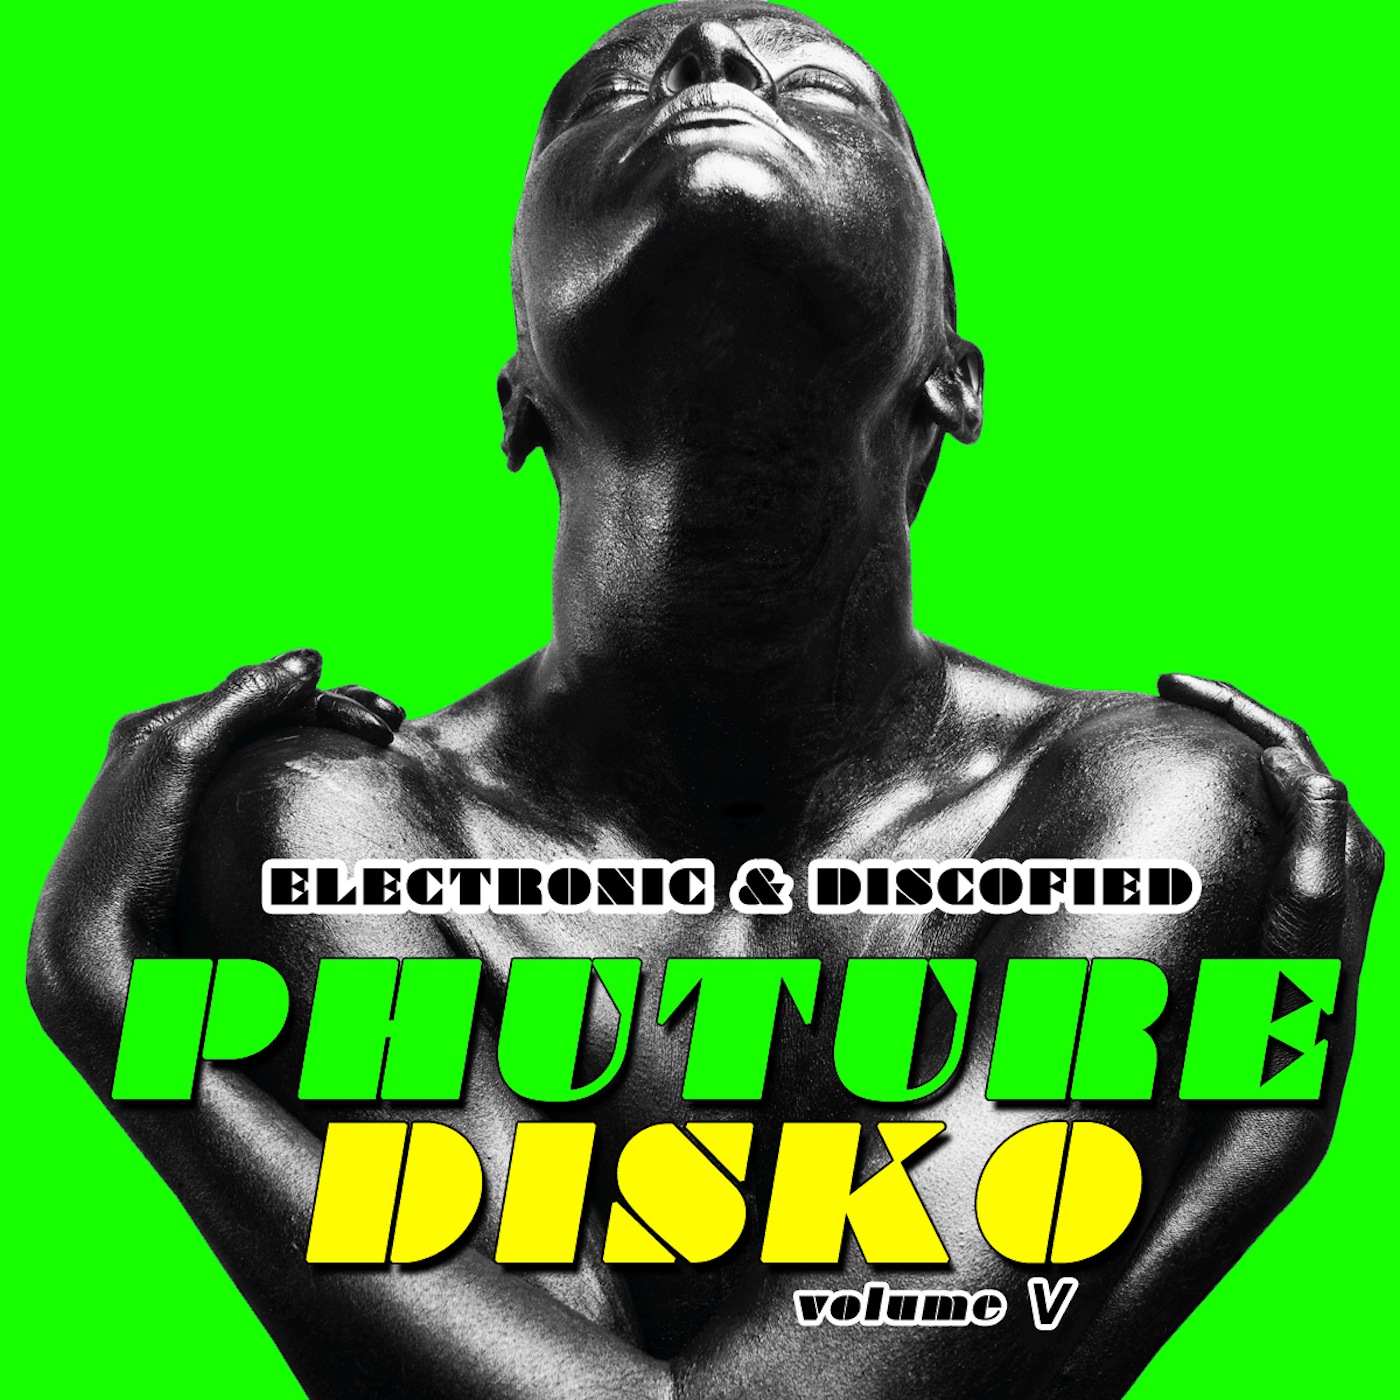 Phuture Disko, Vol. 5 - Electronic & Discofied